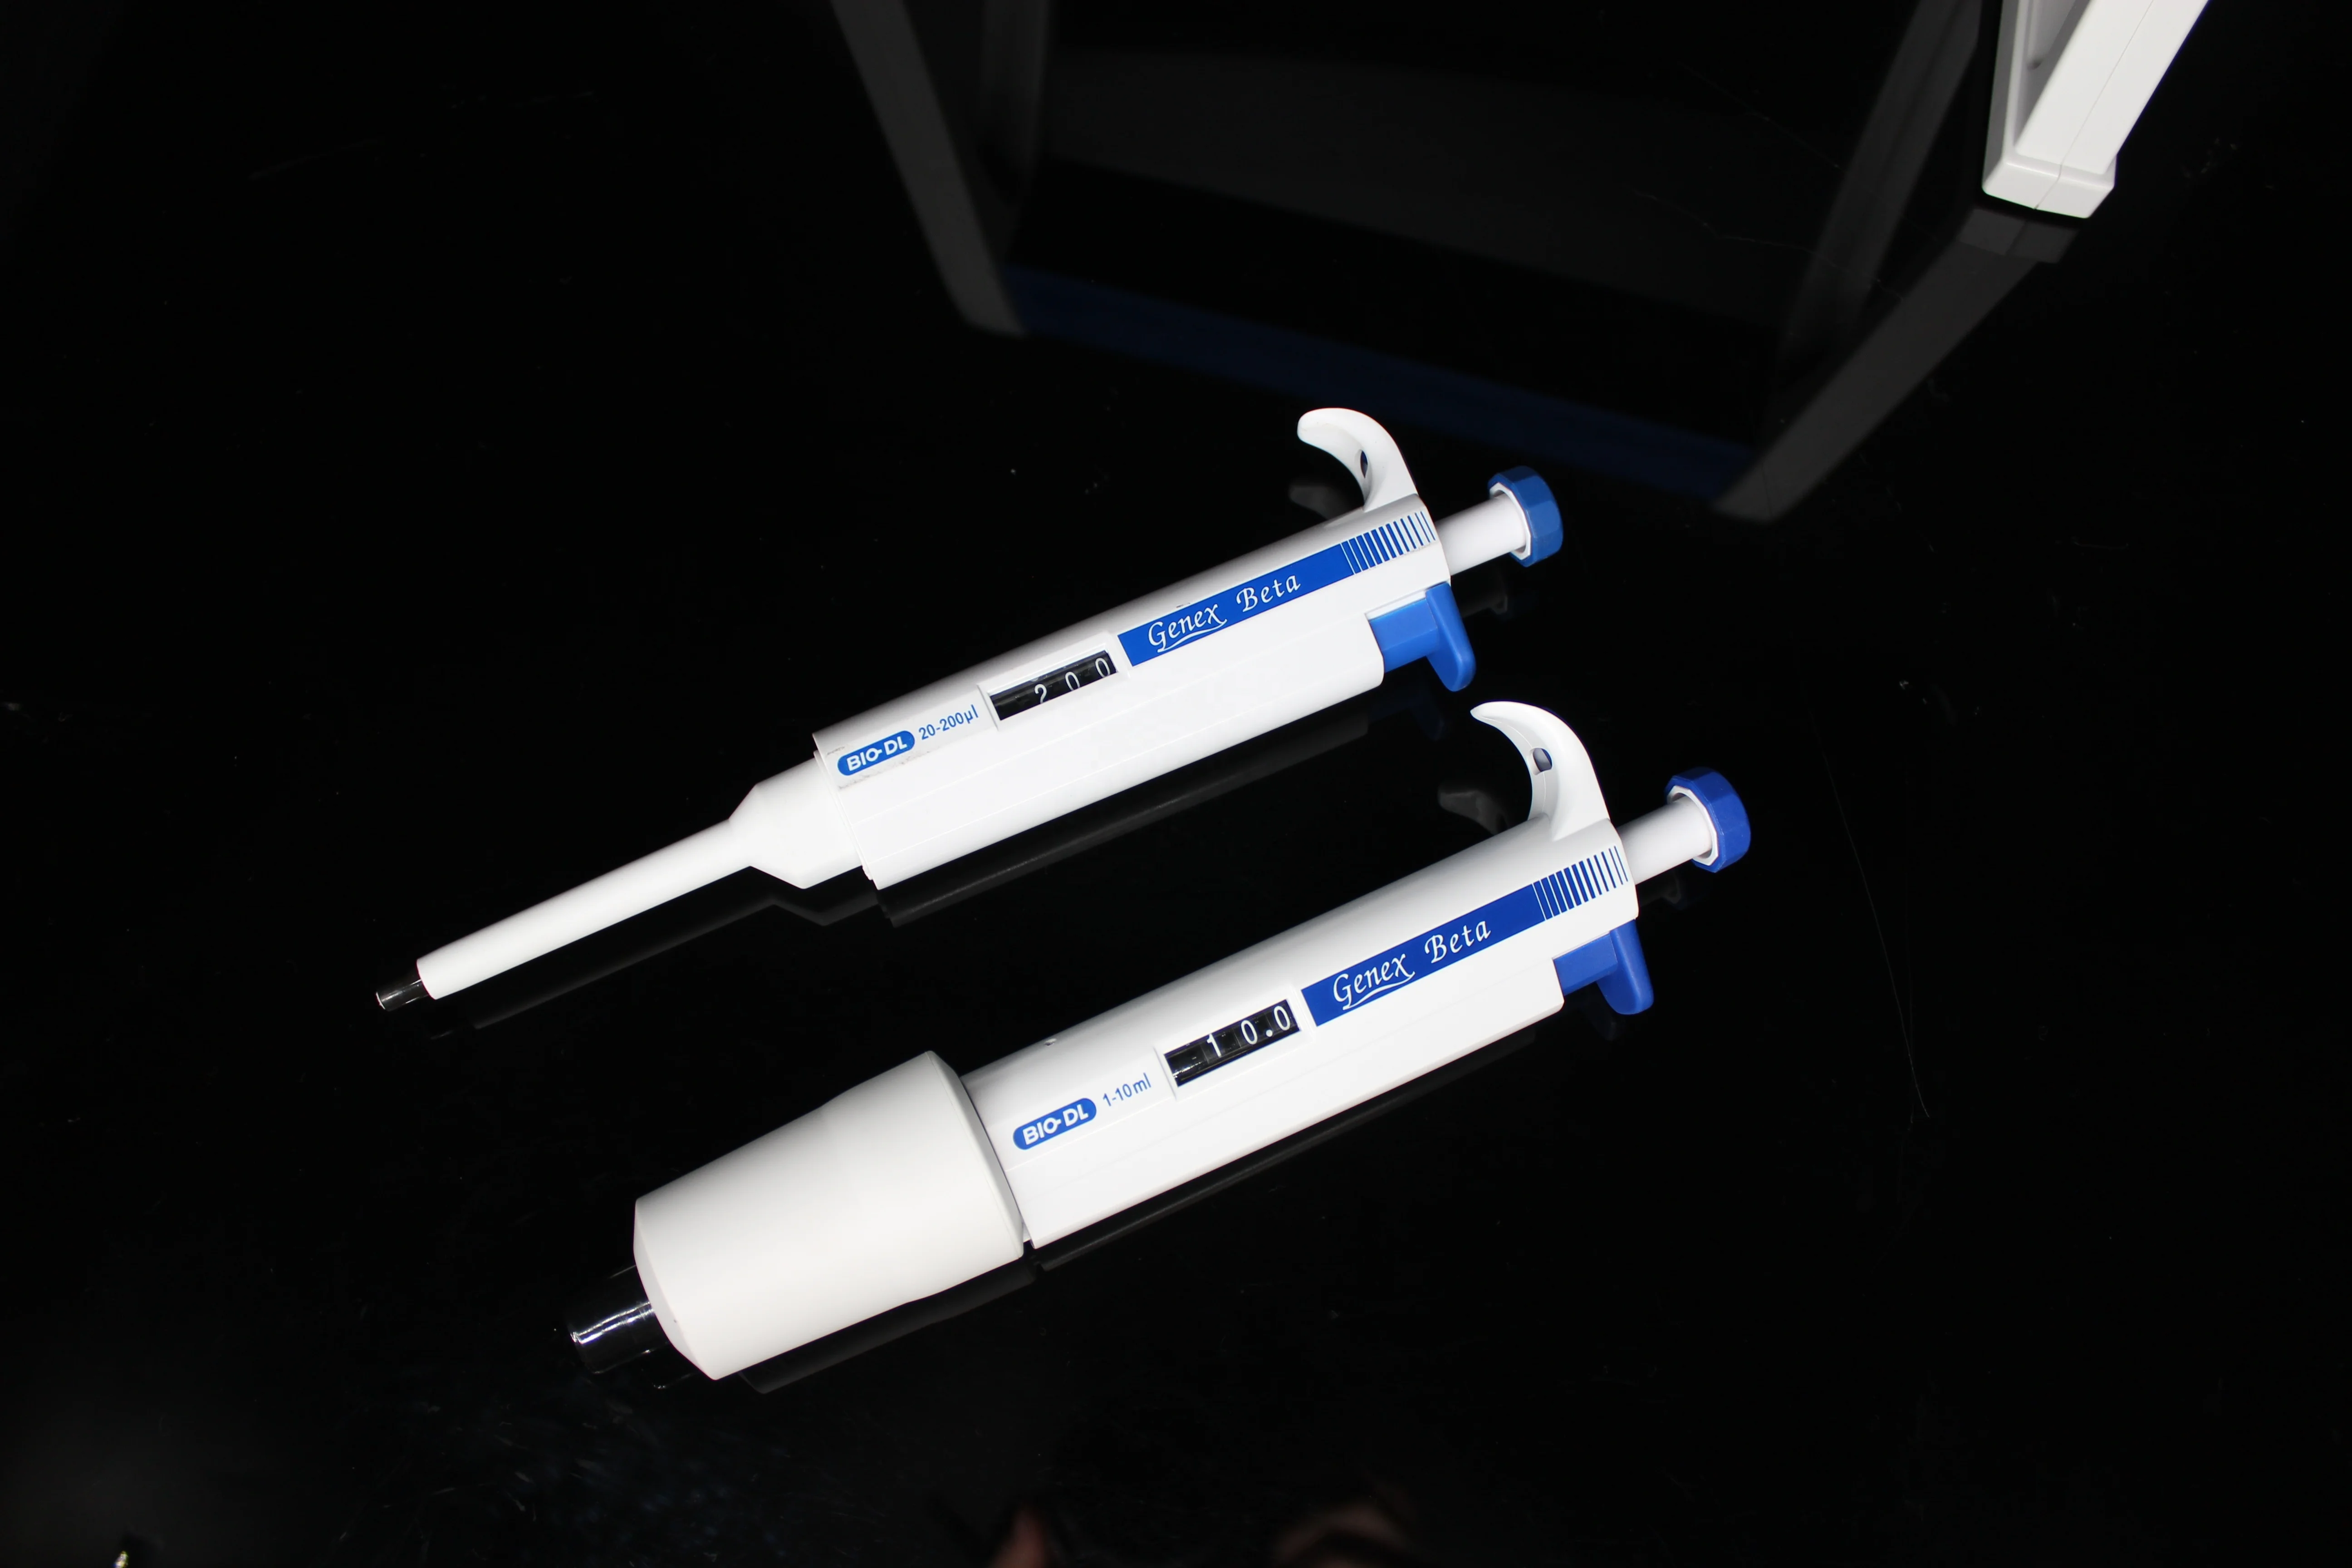 Dragob Lab/medical Adjustable Variable Volume Micro Transfer Pipette Pens